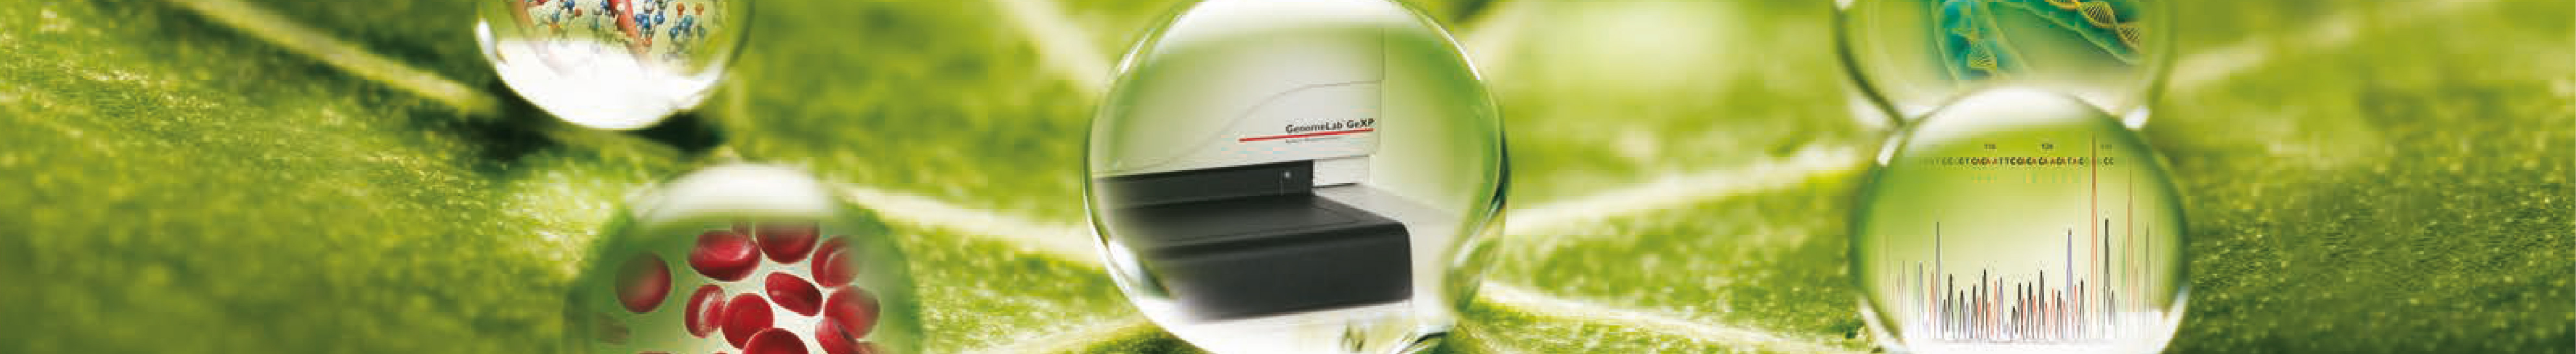 GenomeLab GeXP Genetic Analysis System Header